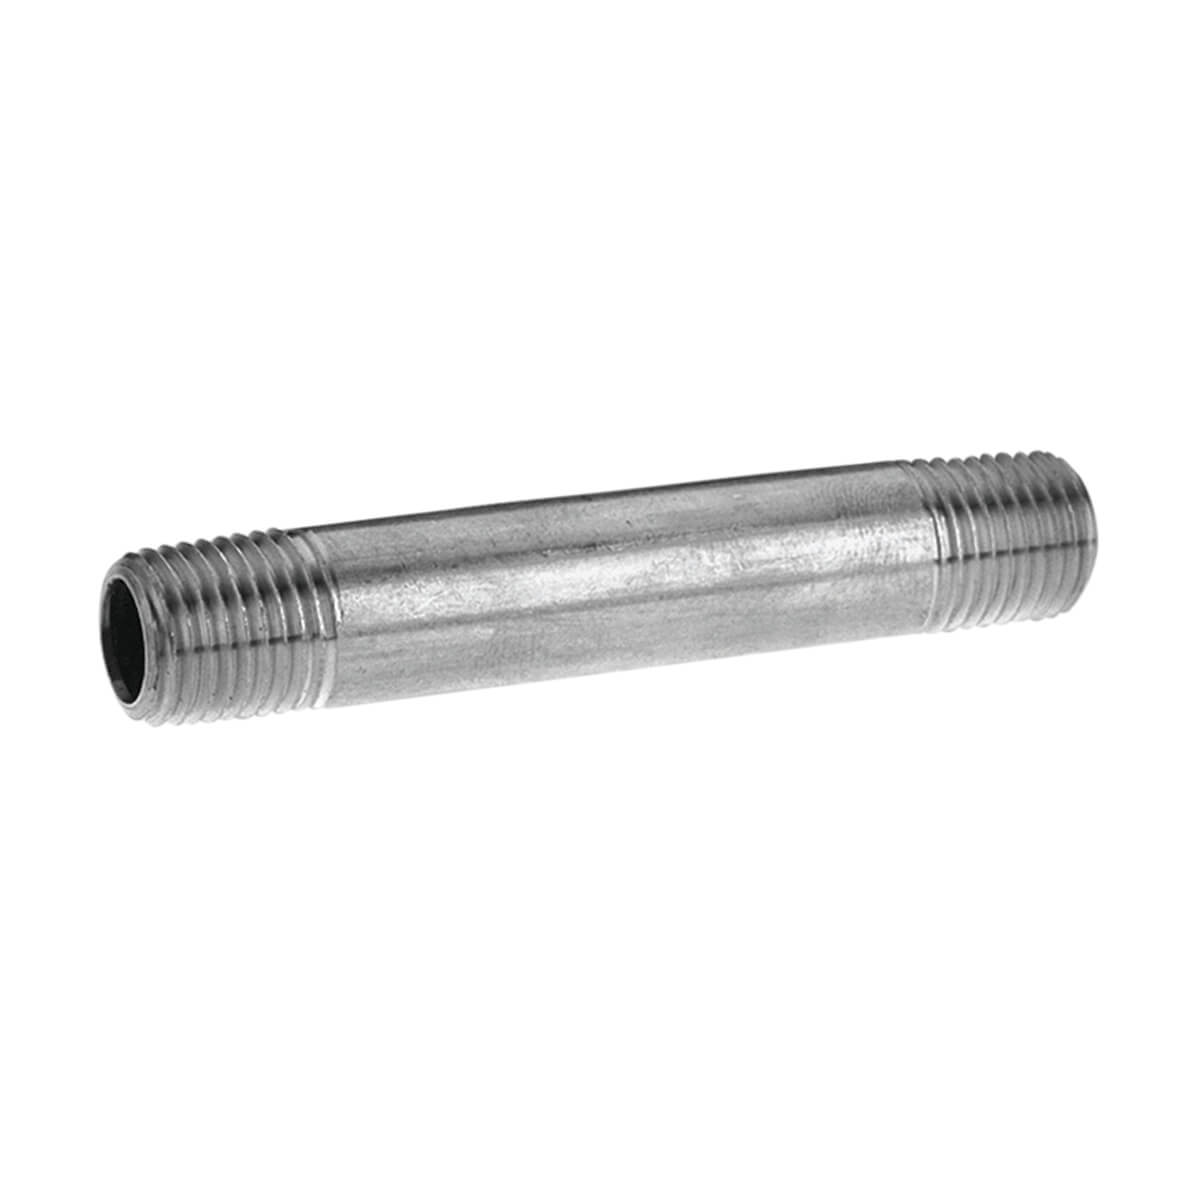 Pipe Nipple Galvanized Steel - 1-1/4-in x 5-1/2-in